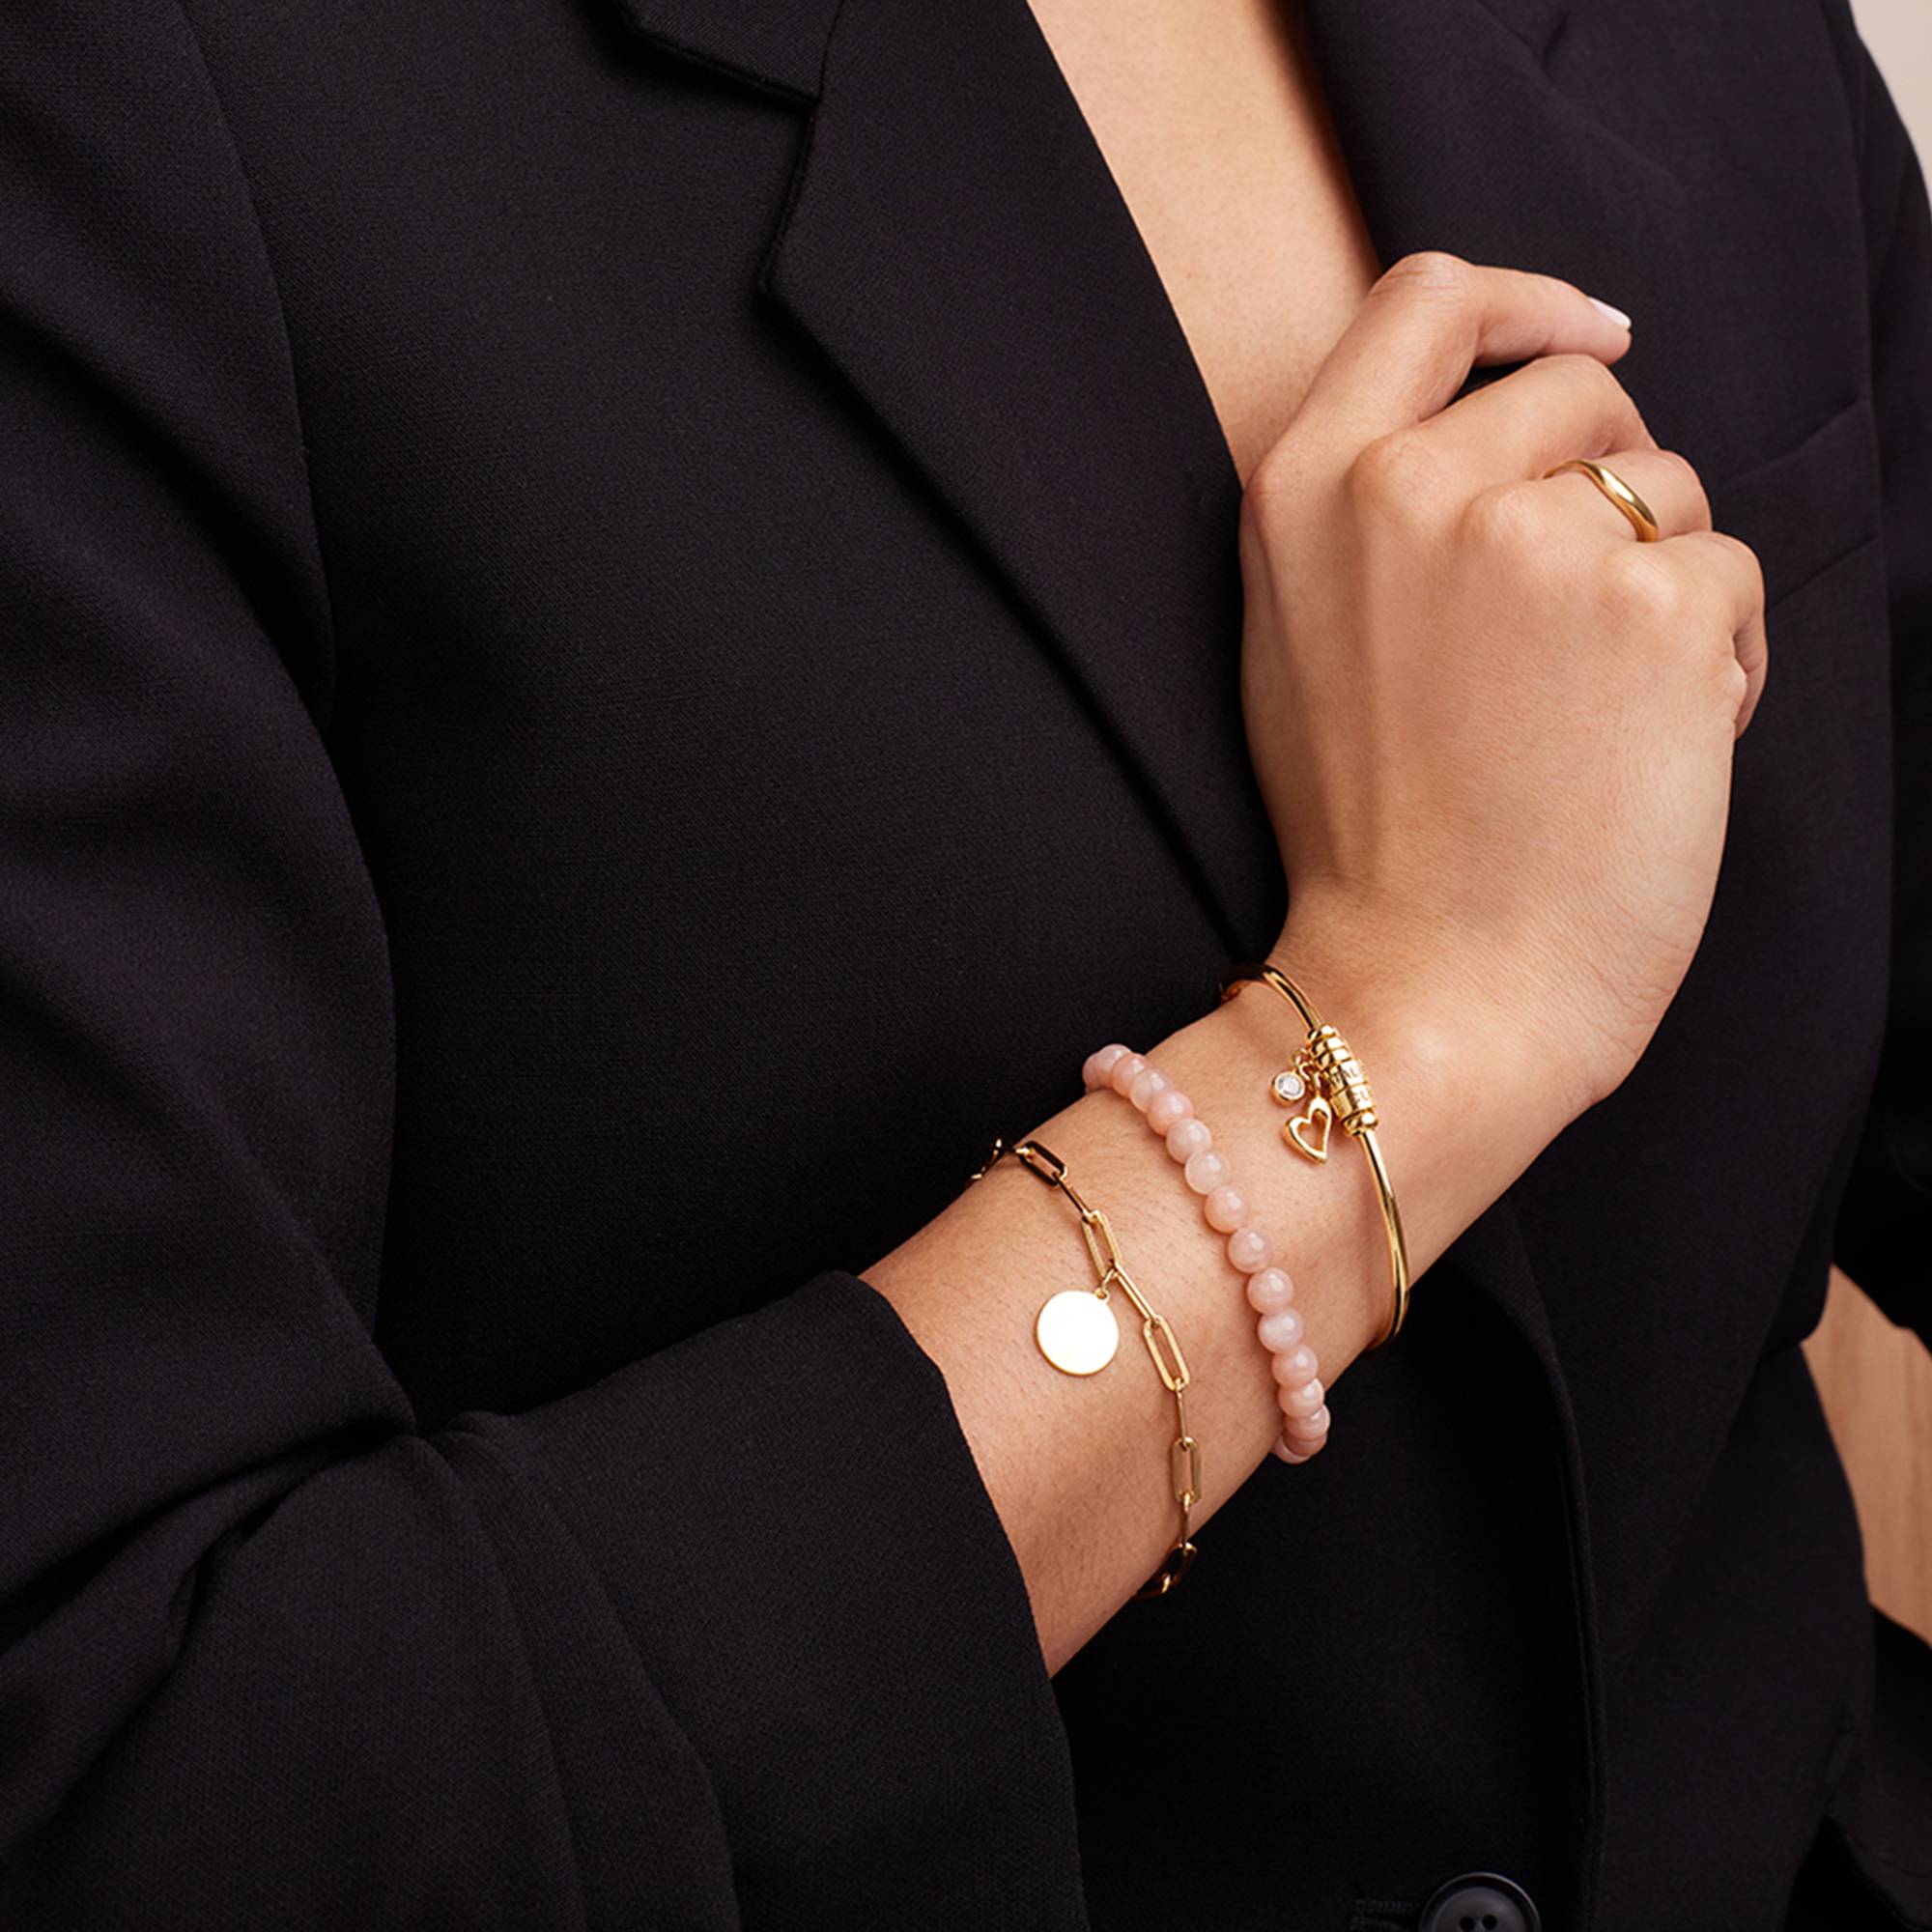 Linda Bangle Bracelet in Gold Vermeil-5 product photo